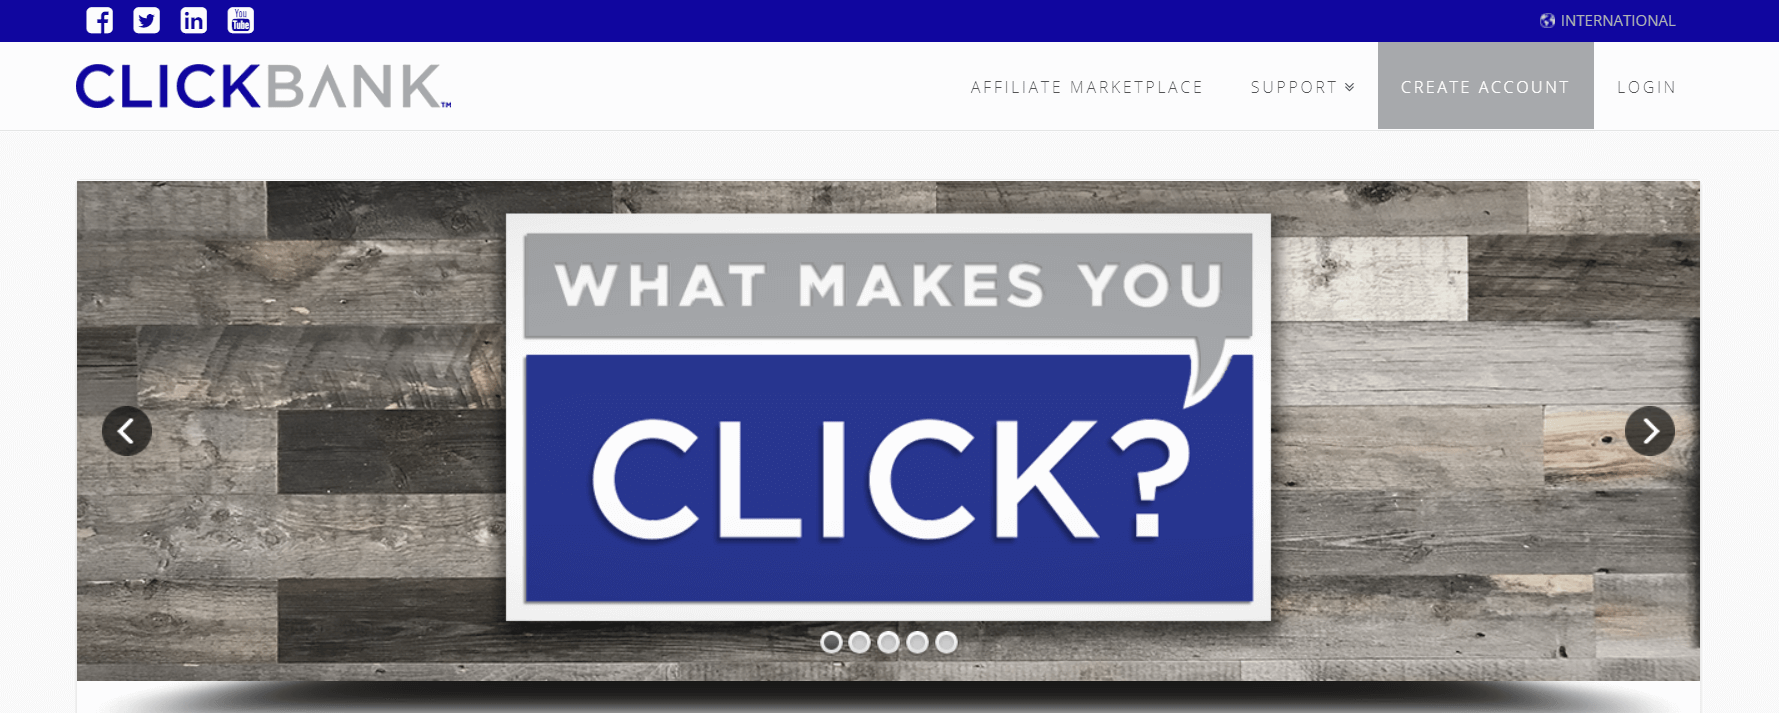 The ClickBank website.